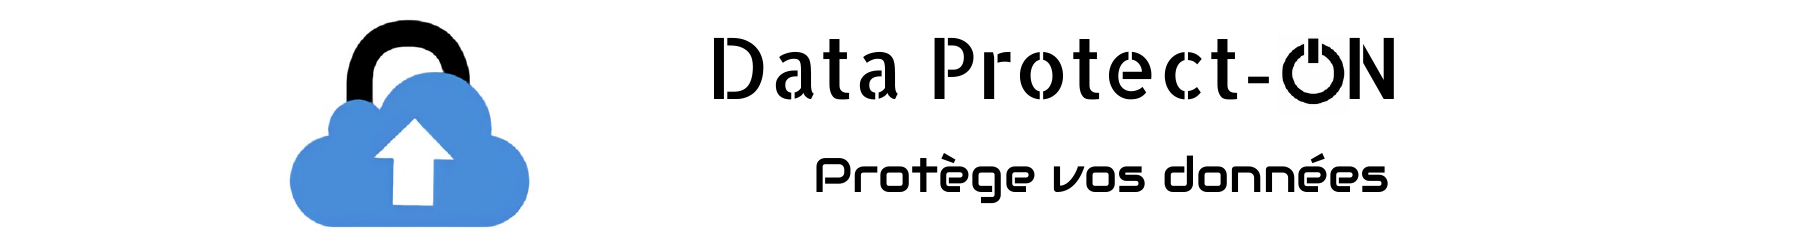 Data Protect-ON protège vos données